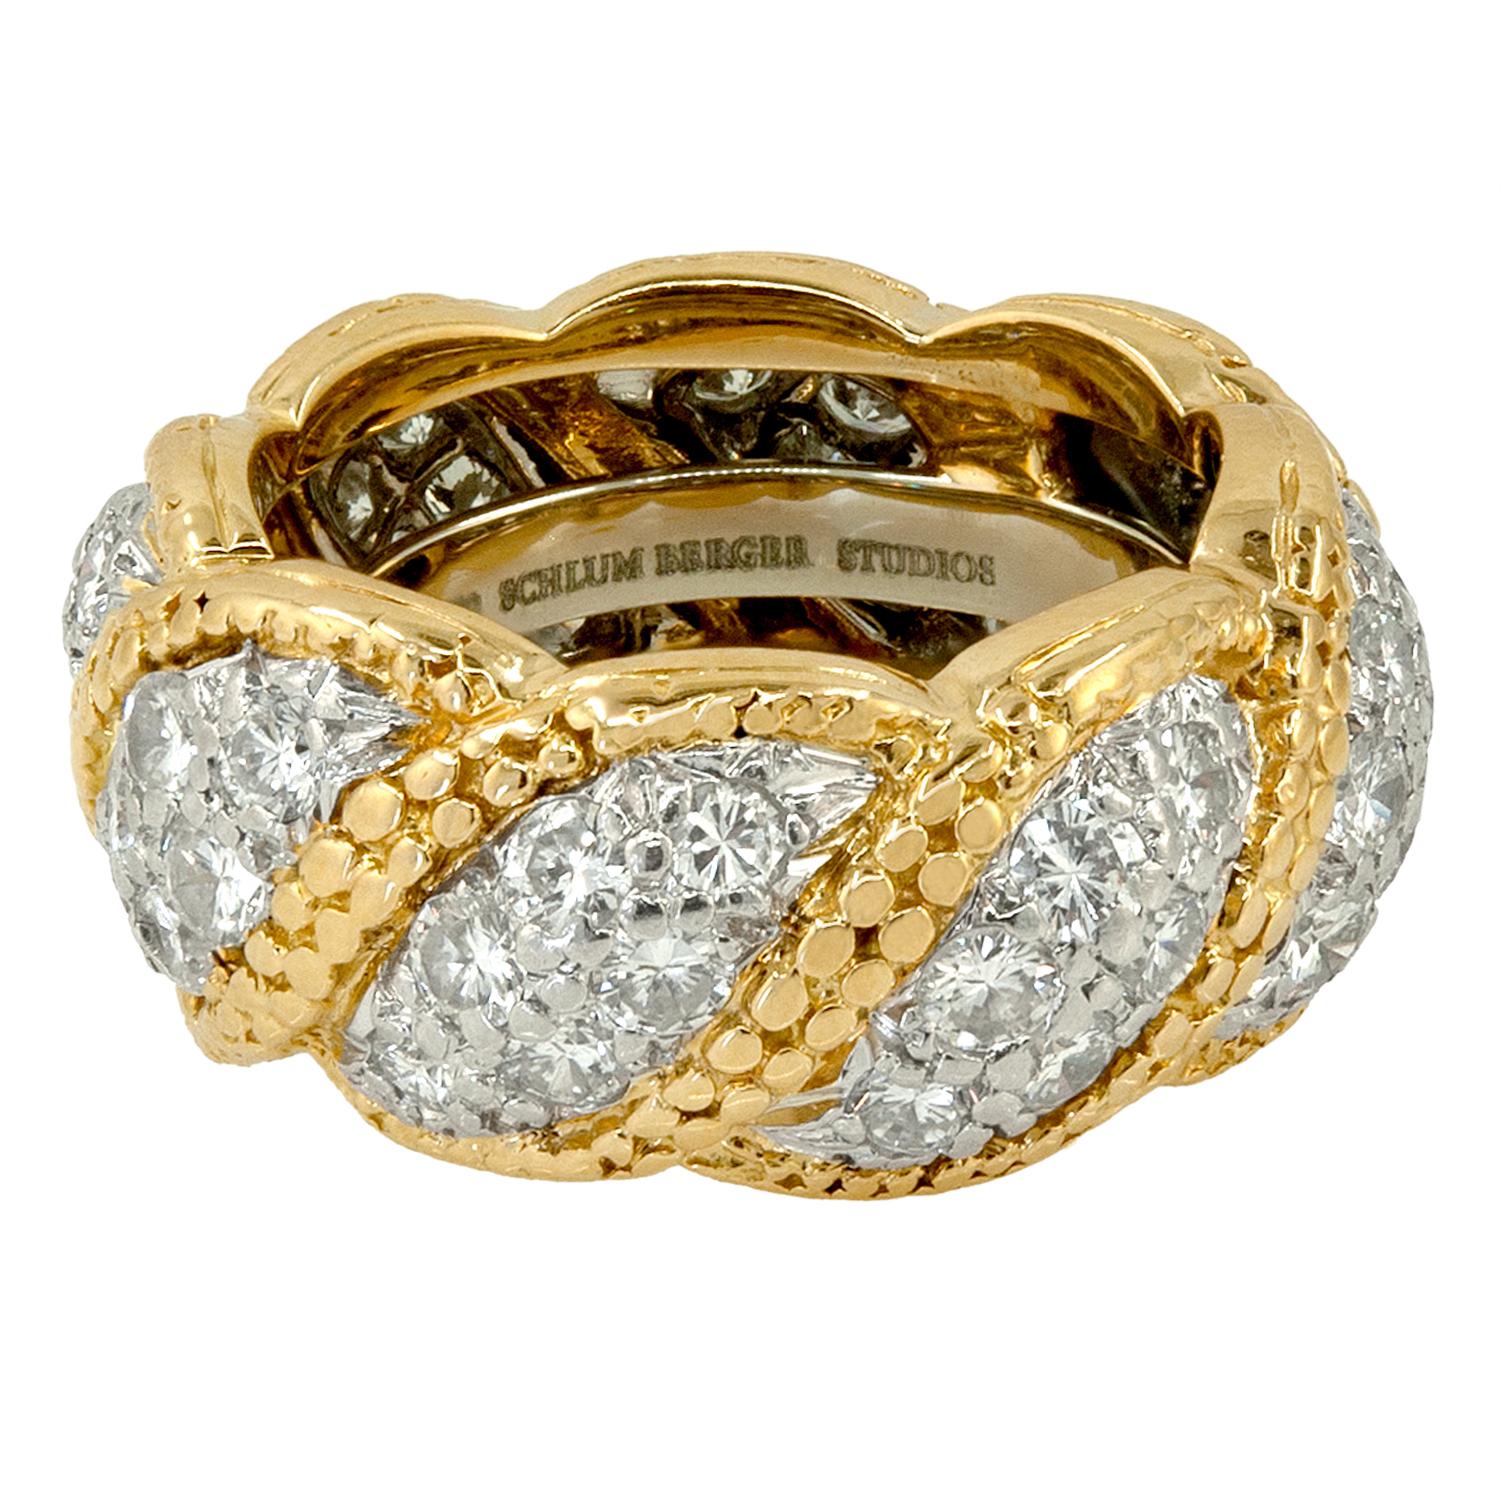 Tiffany & Co. Schlumberger Studio Diamond Ring